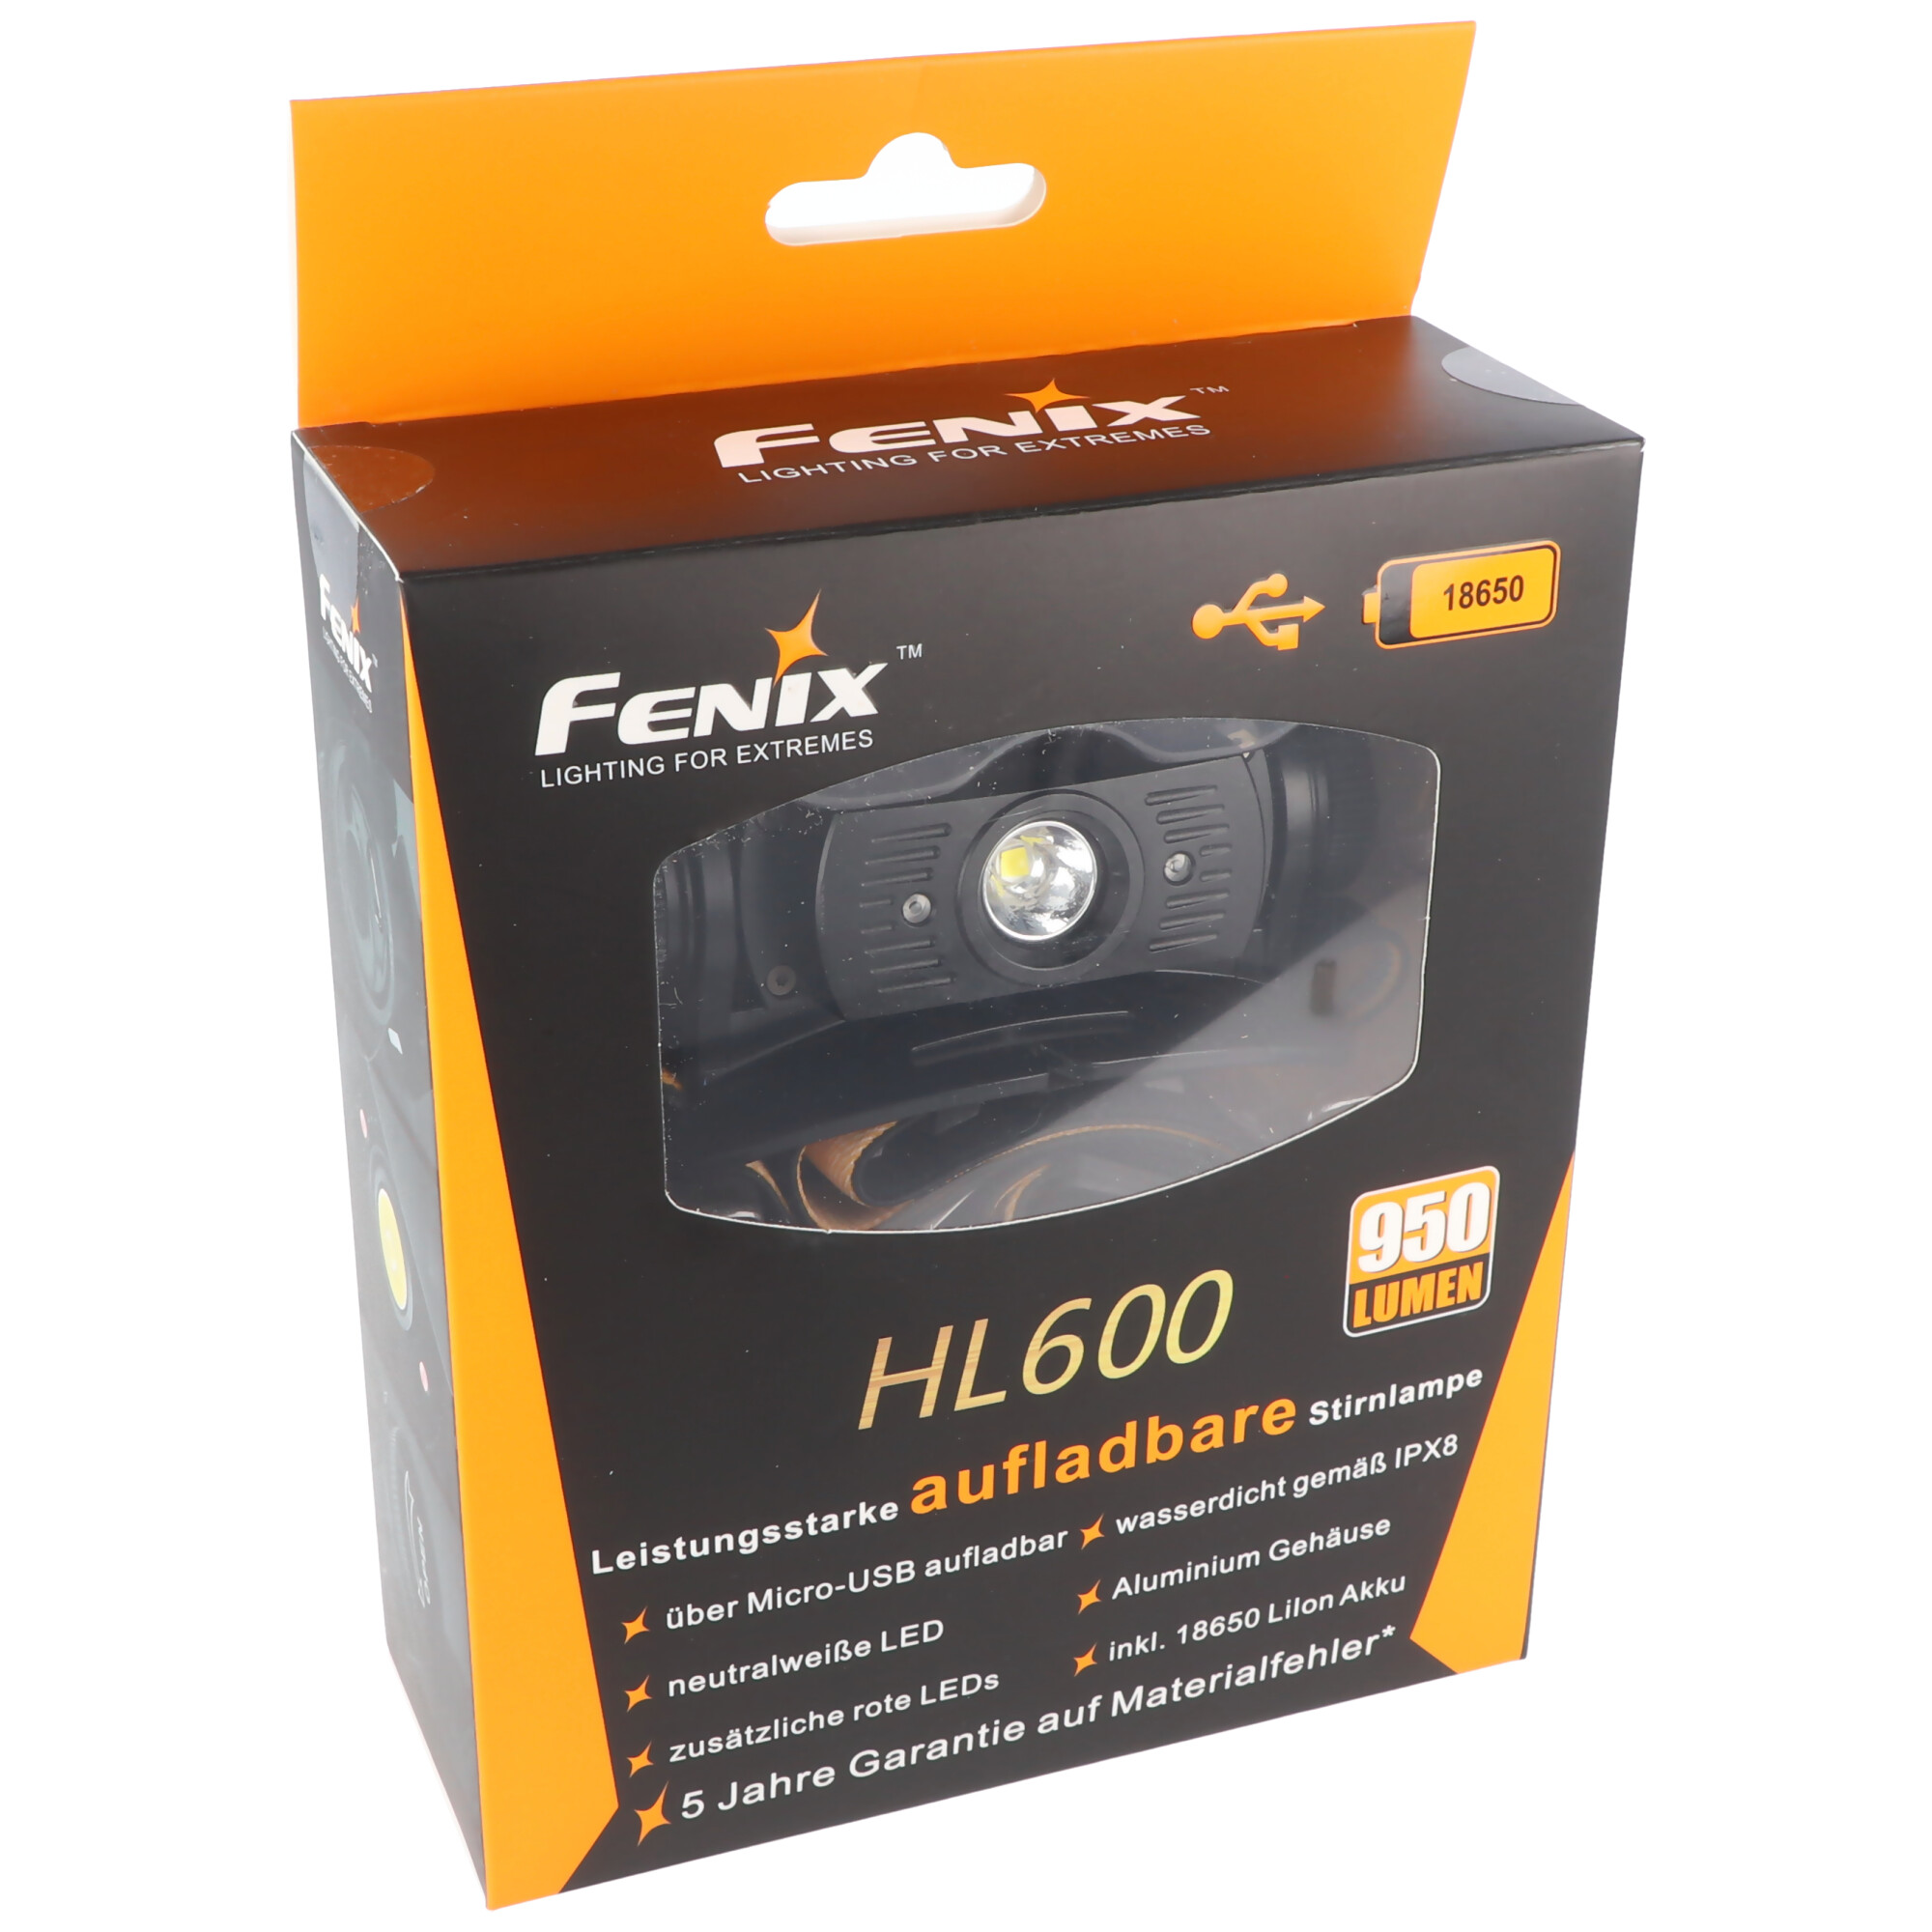 Fenix HL600 die leistungsstarke aufladbare Stirnlampe inklusive Li-ion Akku Micro-USB aufladbar